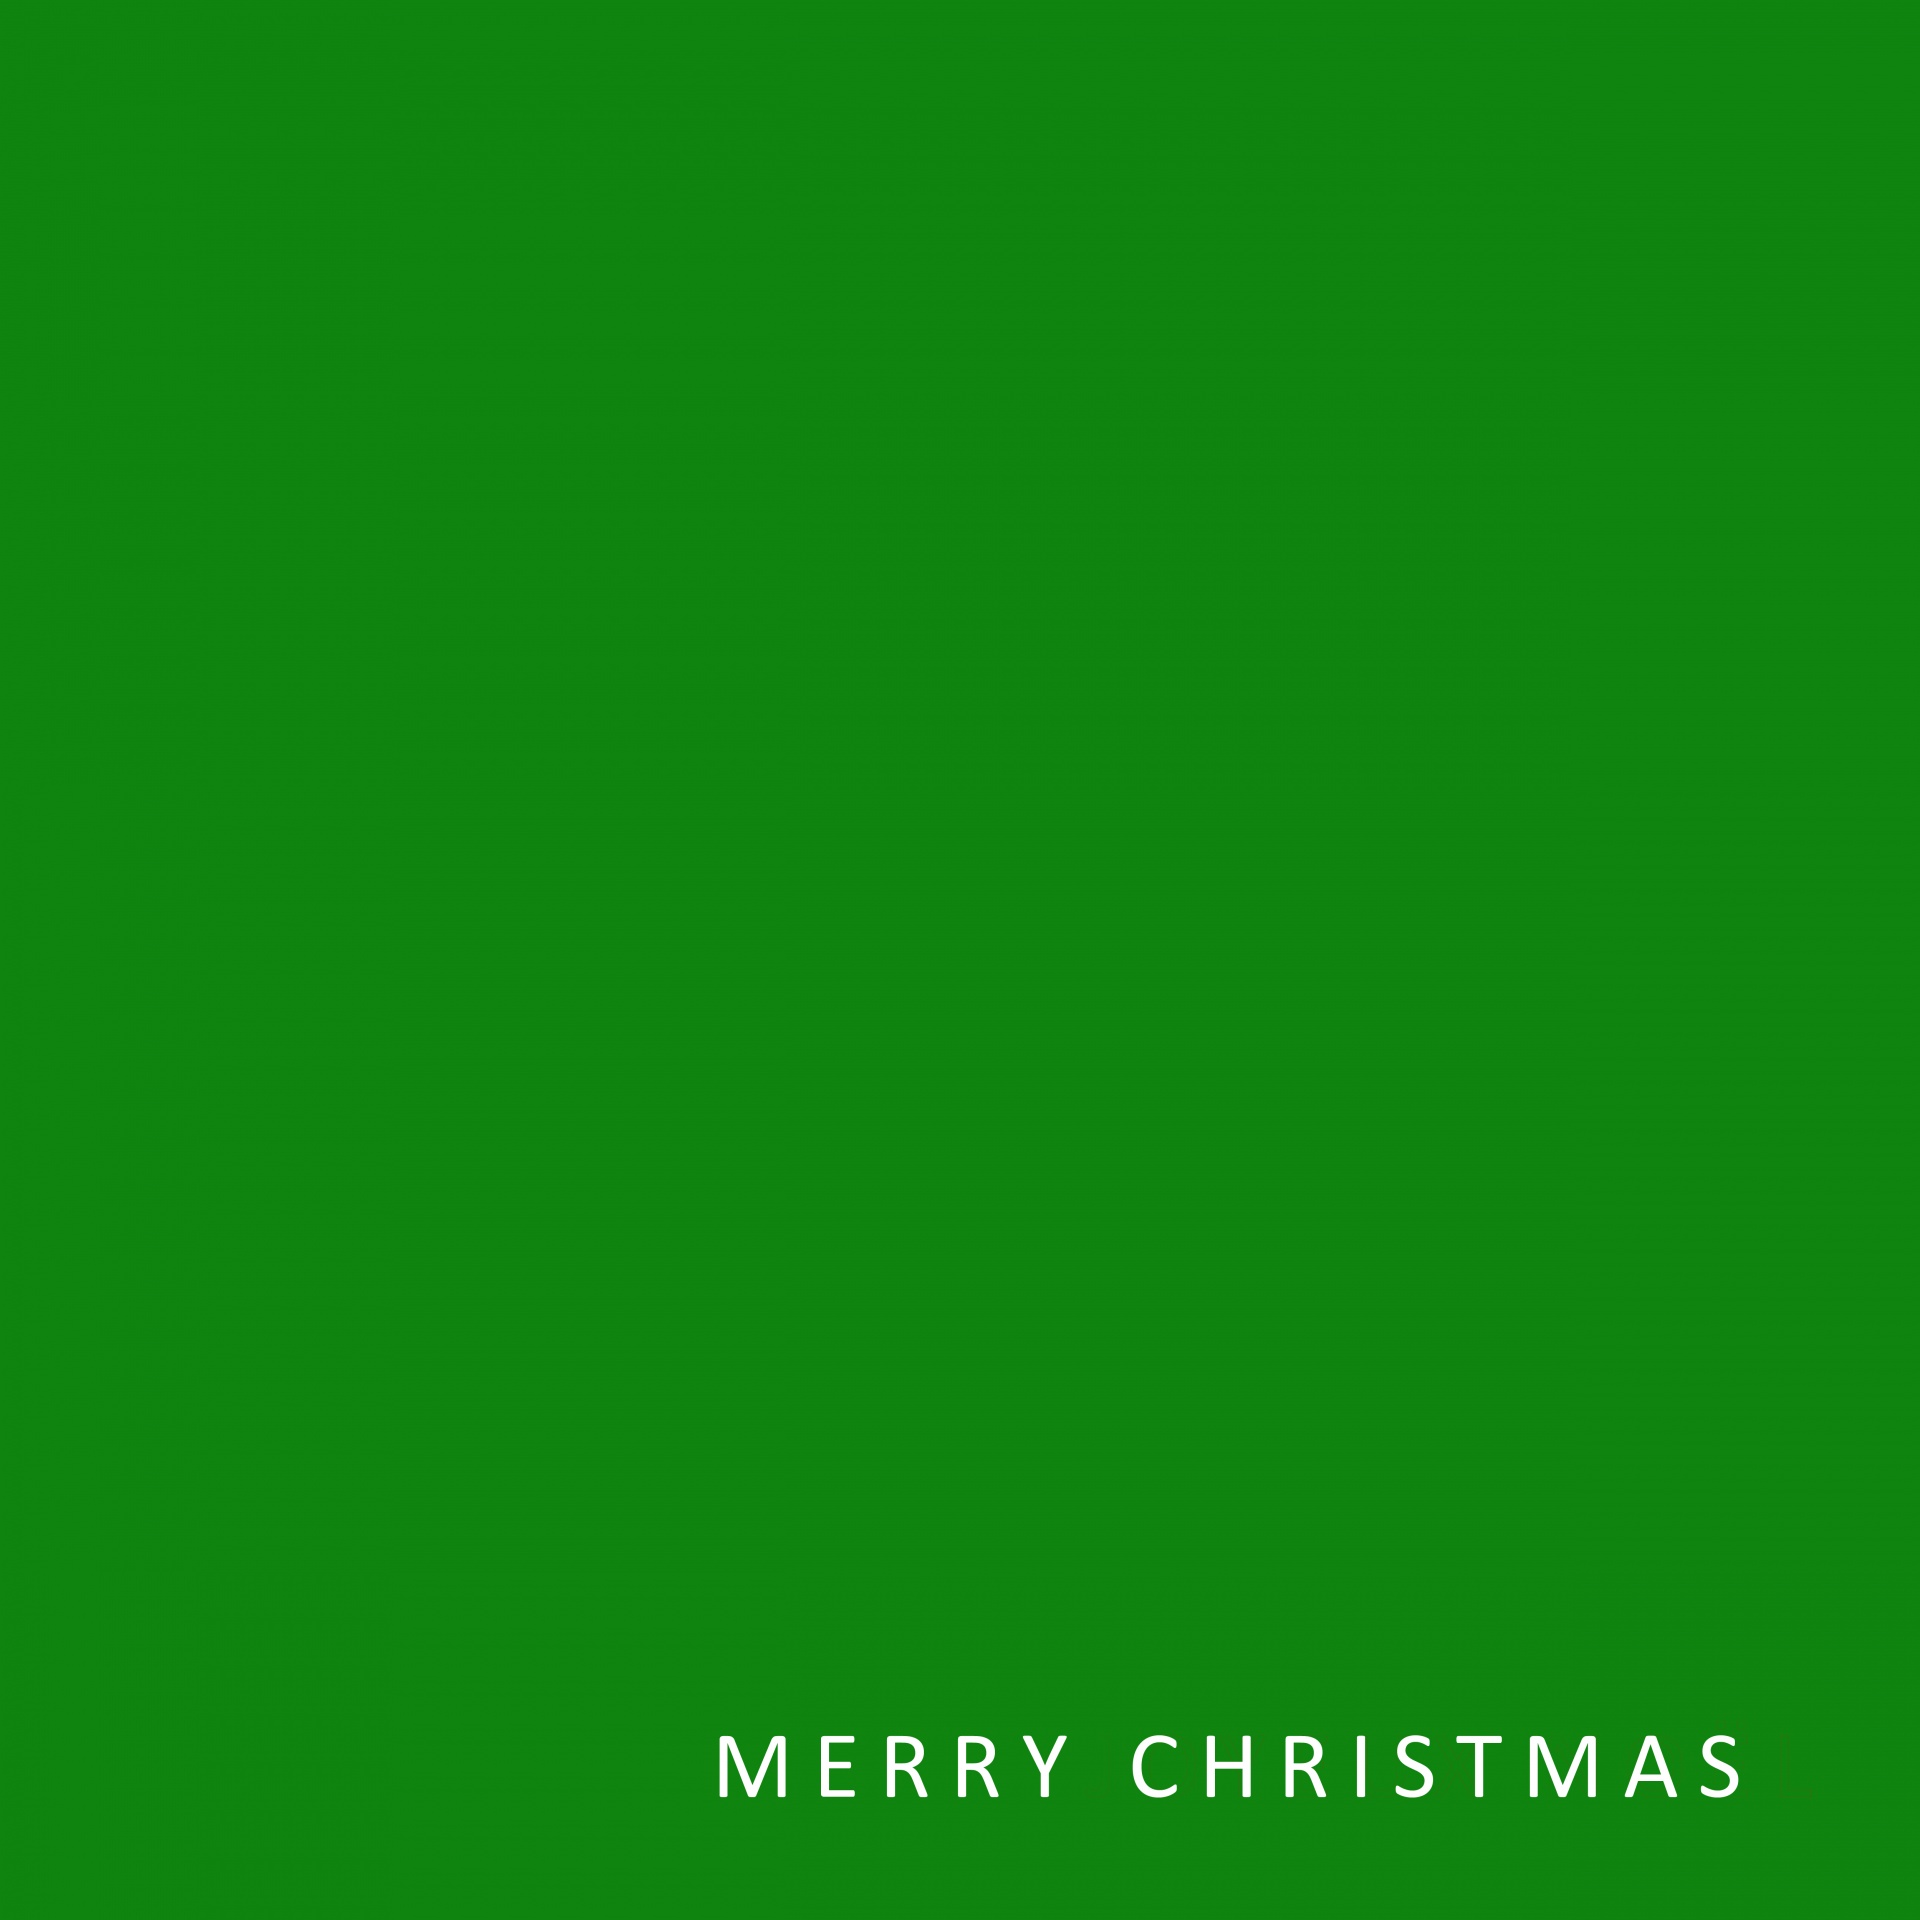 Merry Christmas Greeting Green